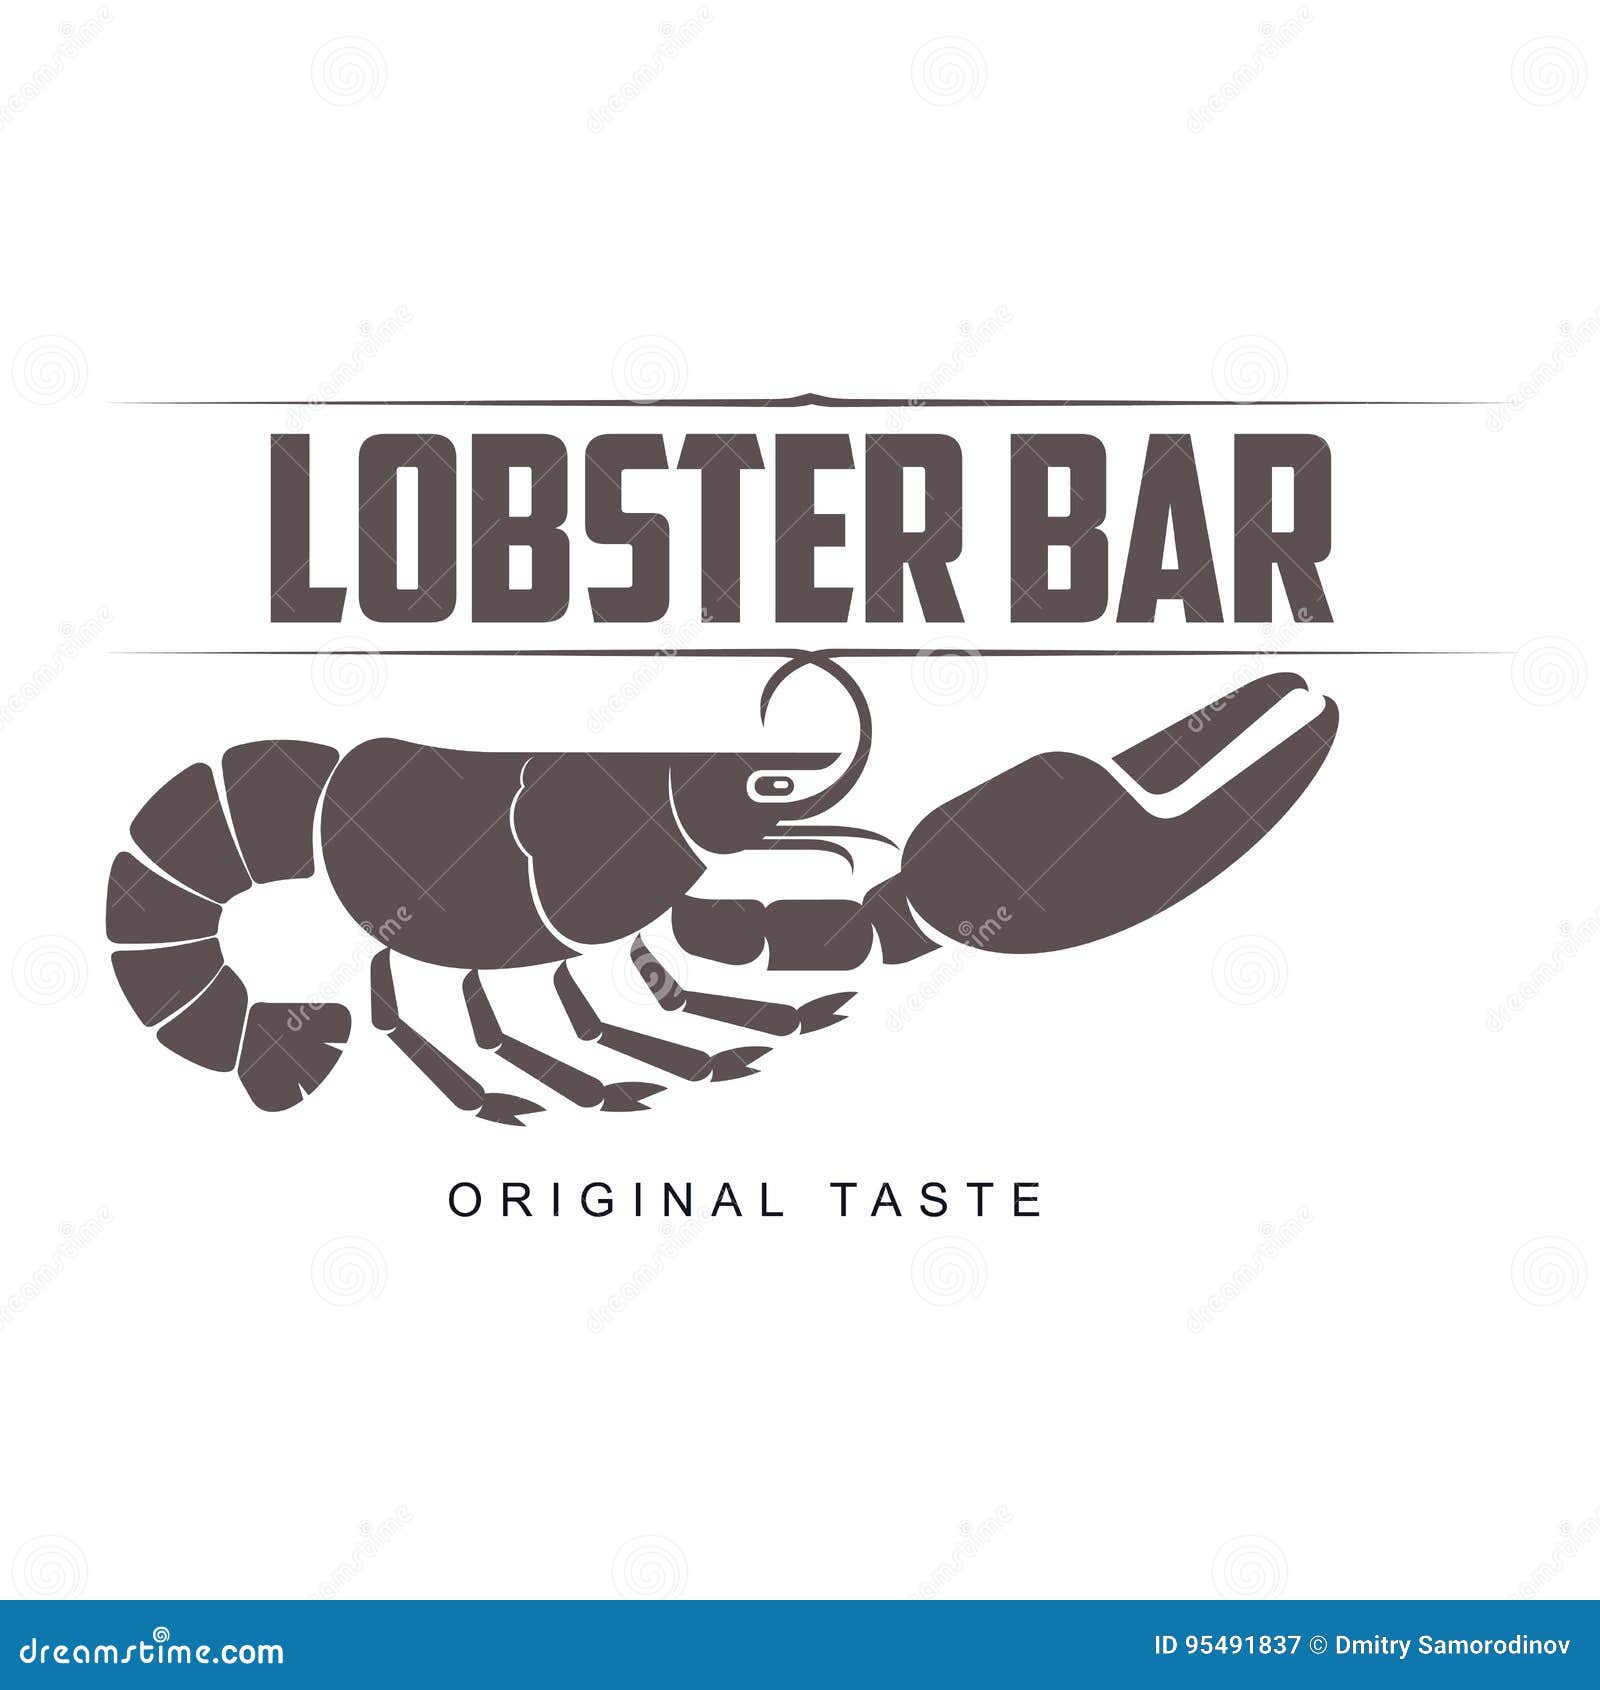 Lobster bar logo stock vector. Illustration of claw, food - 95491837